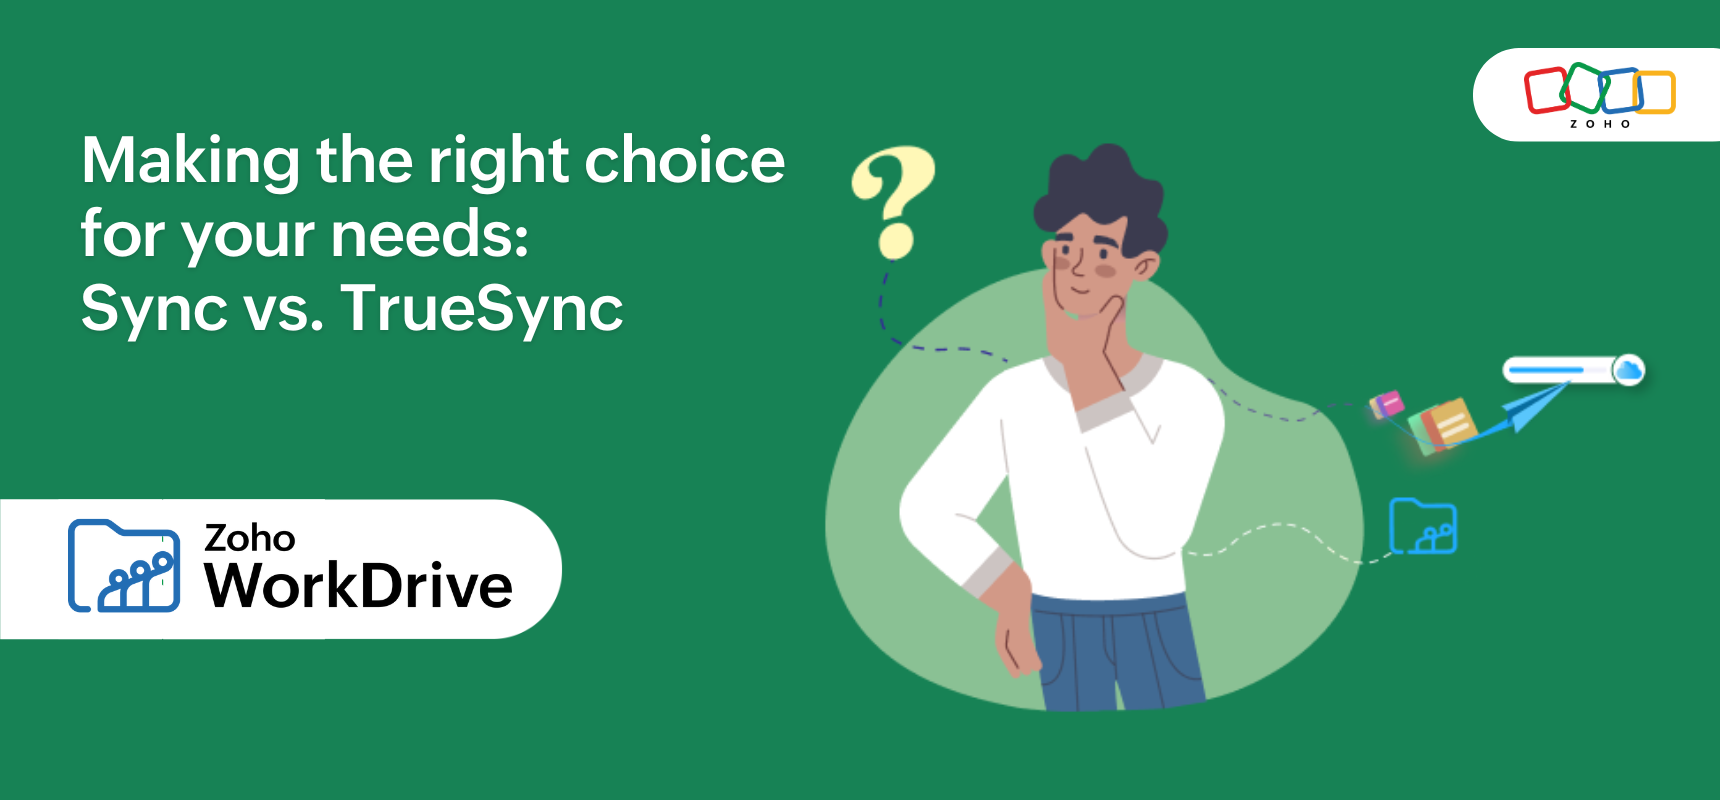 WorkDrive Sync vs. TrueSync